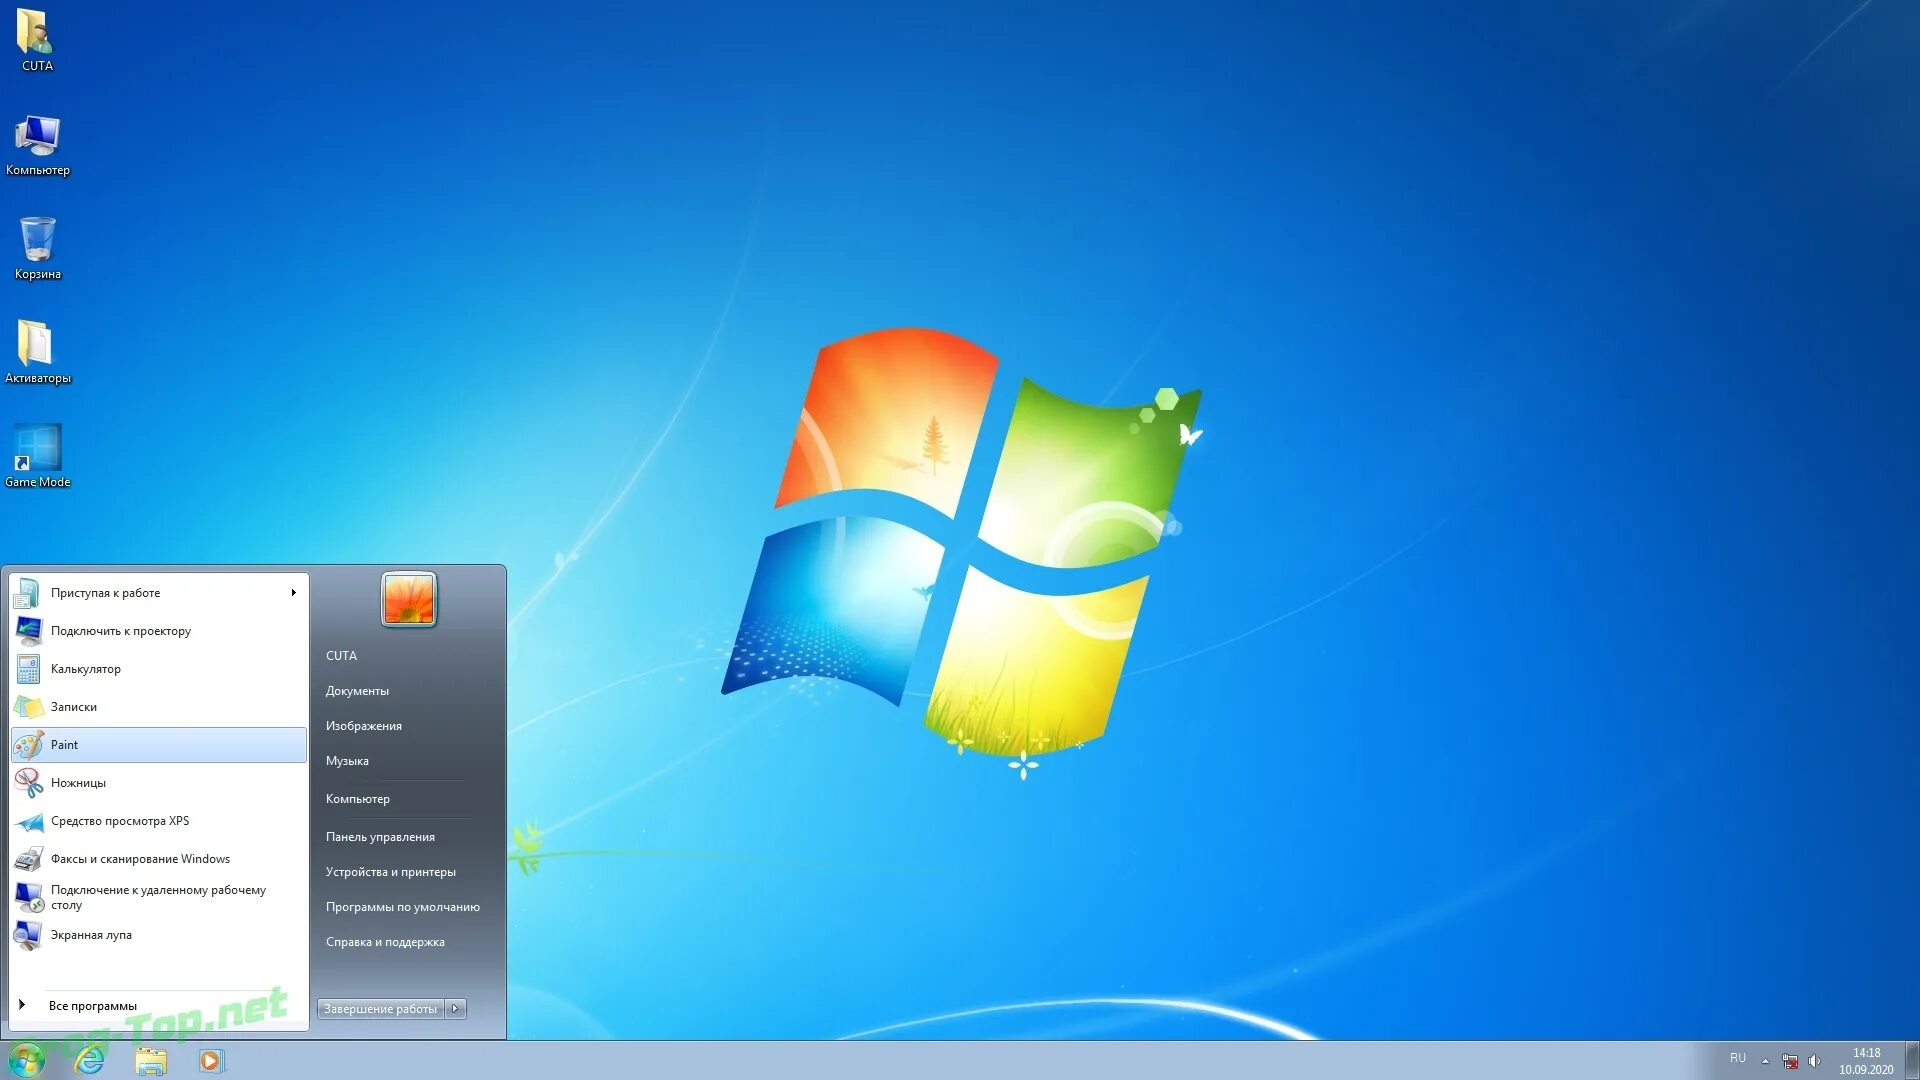 Сборки вин 7. Windows 7 рабочий стол. Картинки Windows 7. Windows 7 пуск. Экран компьютера виндовс 7.